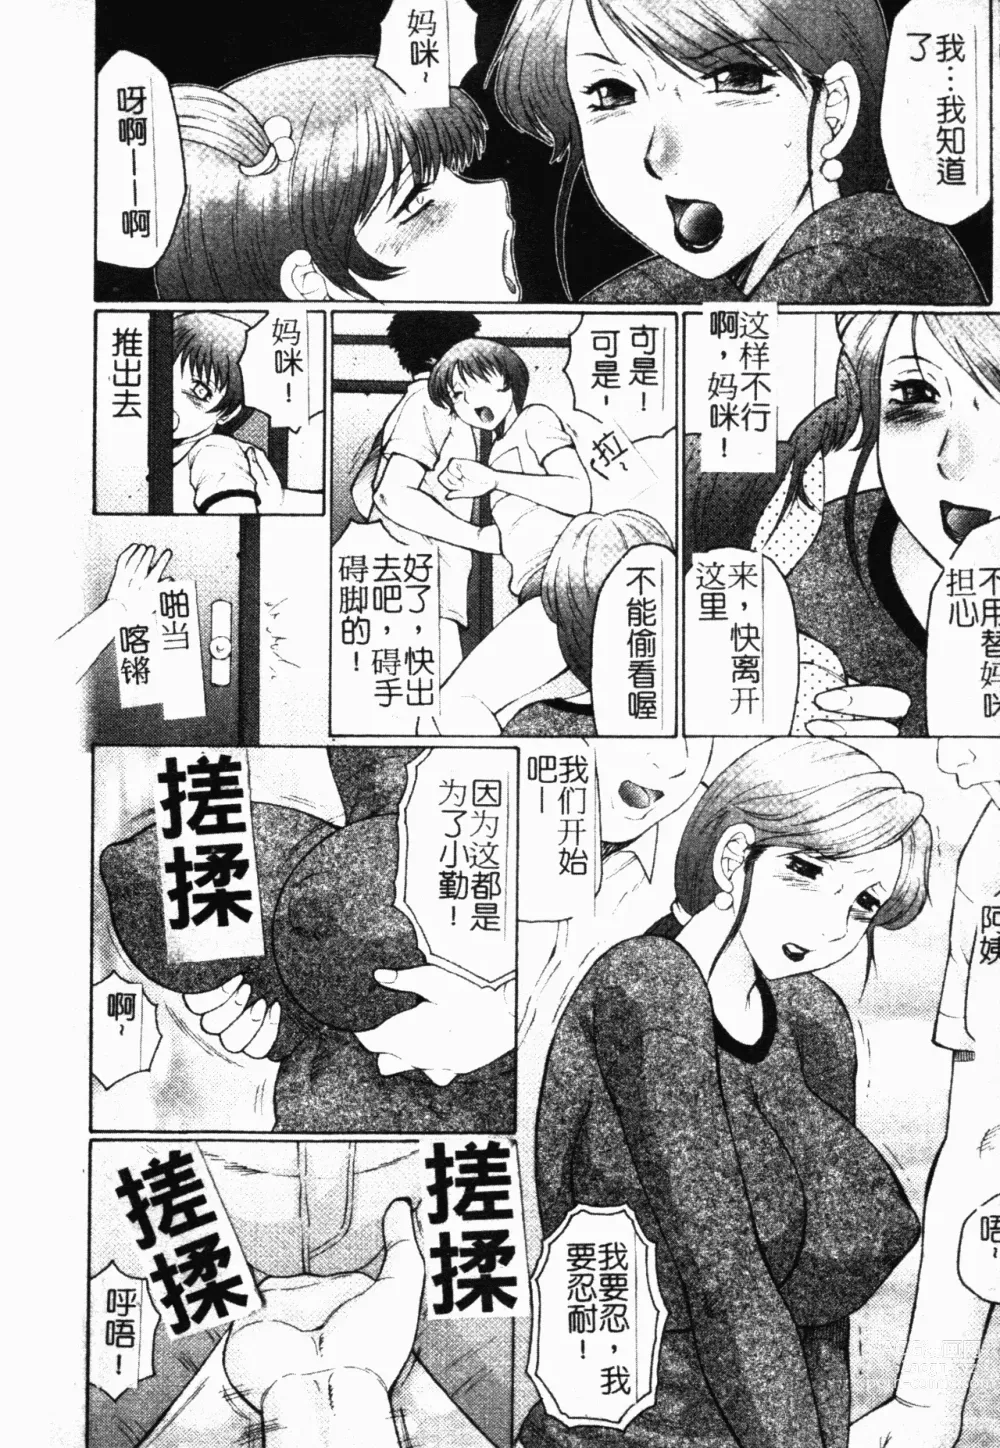 Page 14 of manga Haha Mamire